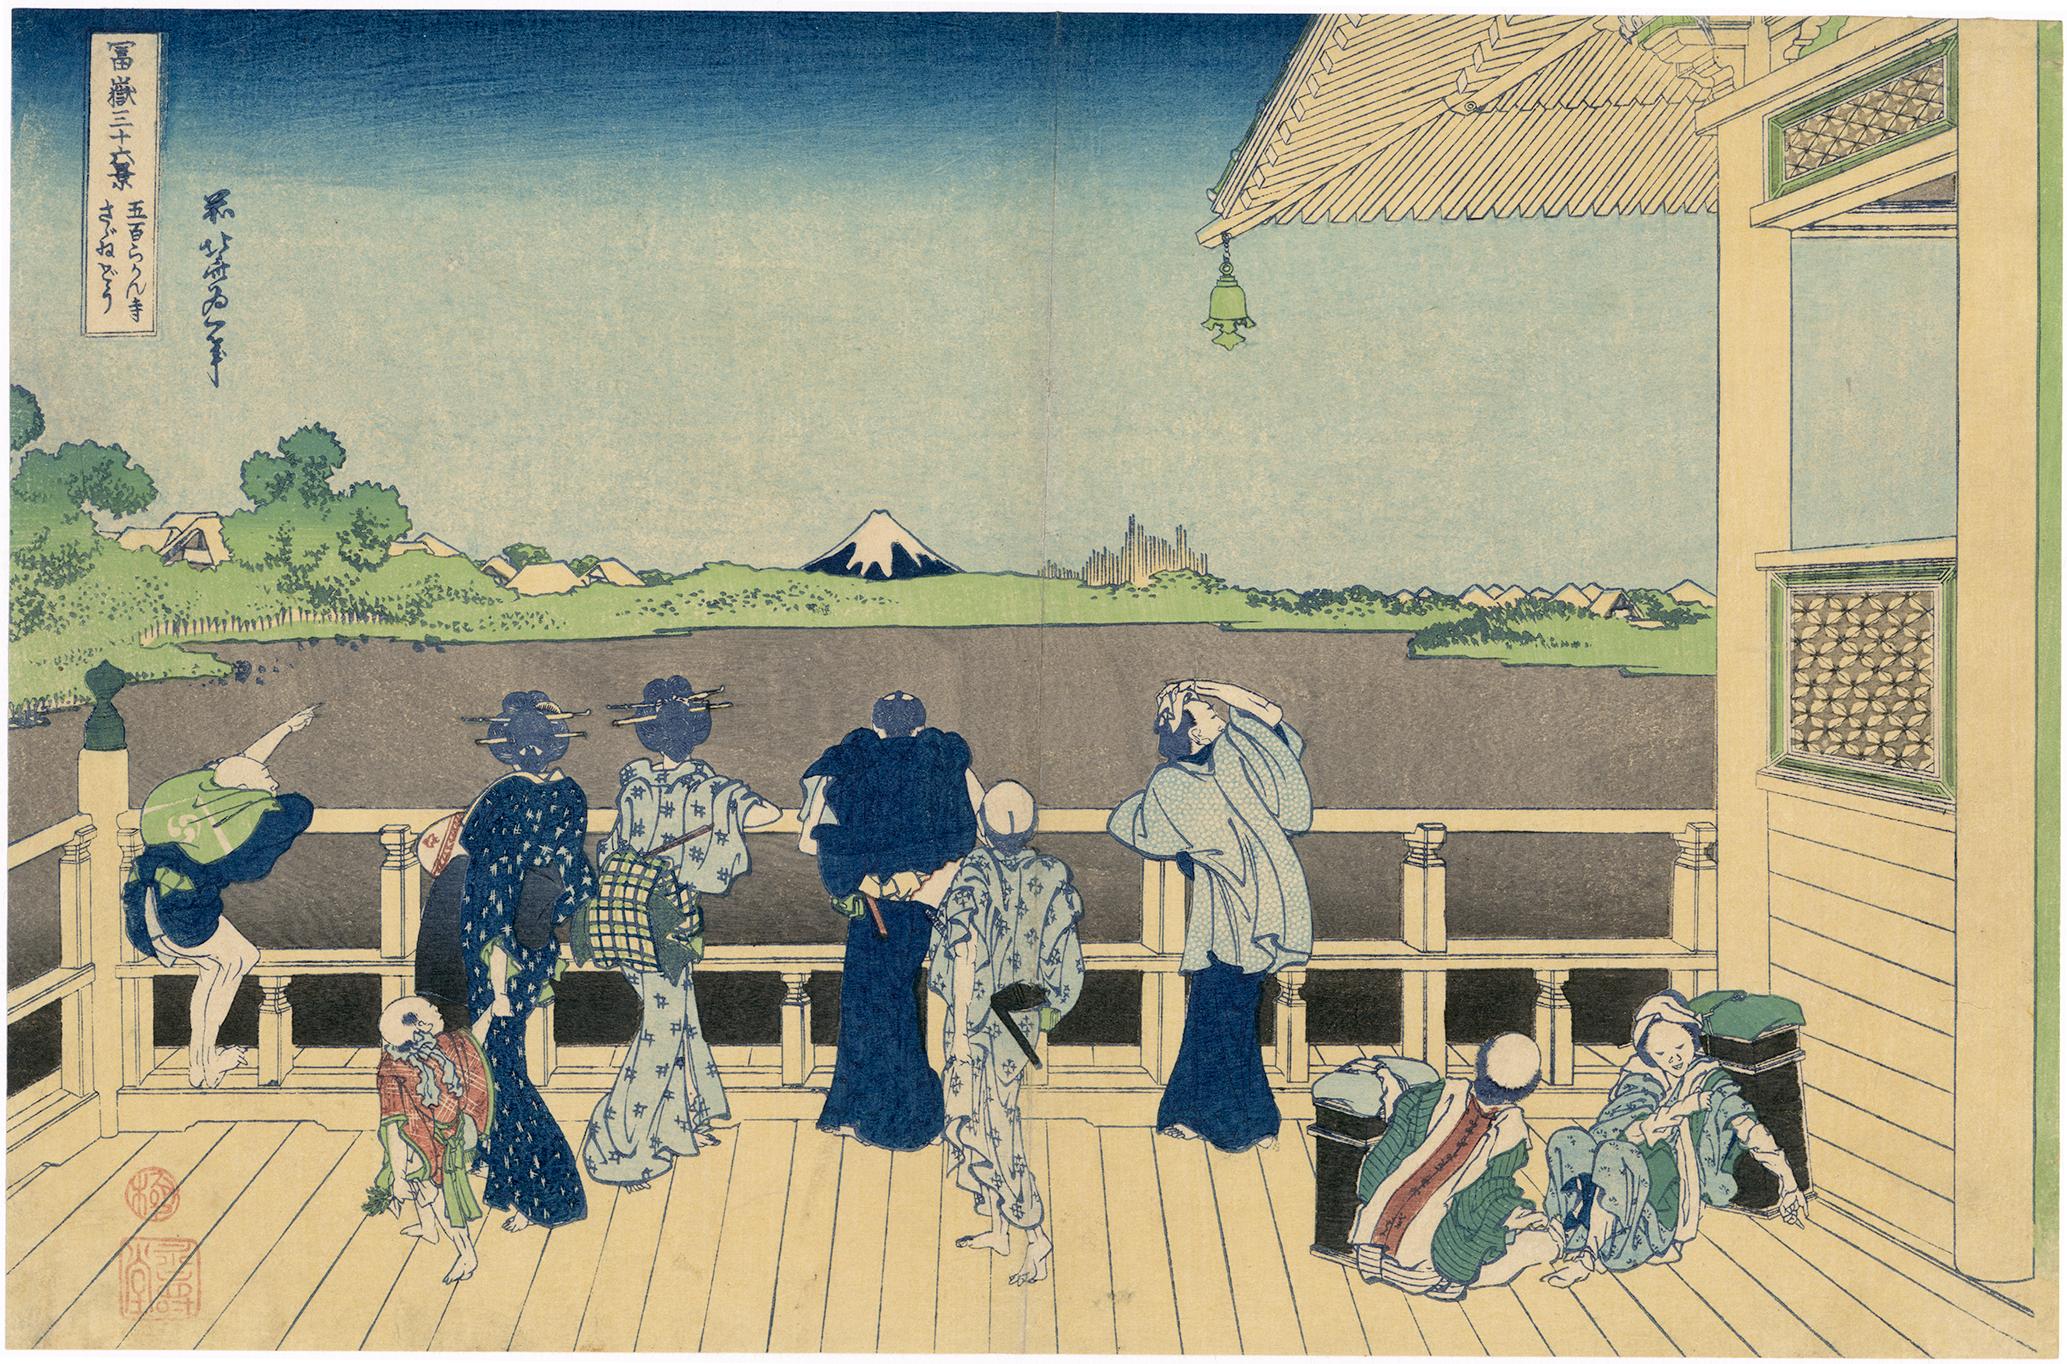 Katsushika Hokusai Landscape Print - Turban Shell Hall from the series Thirty-Six Views of Mount Fuji